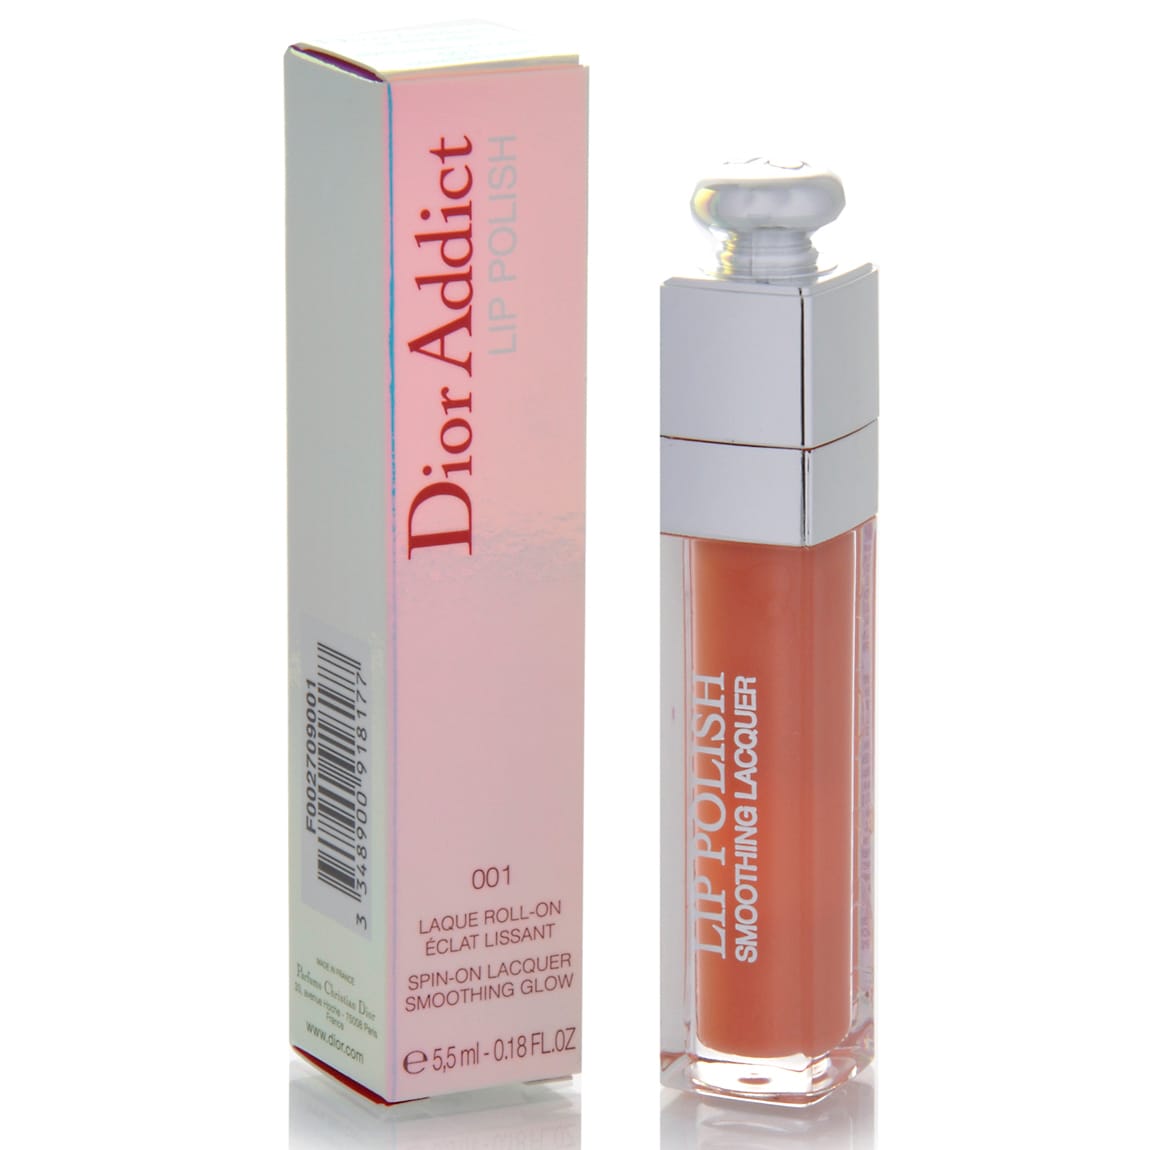 dior lip polish smoothing lacquer